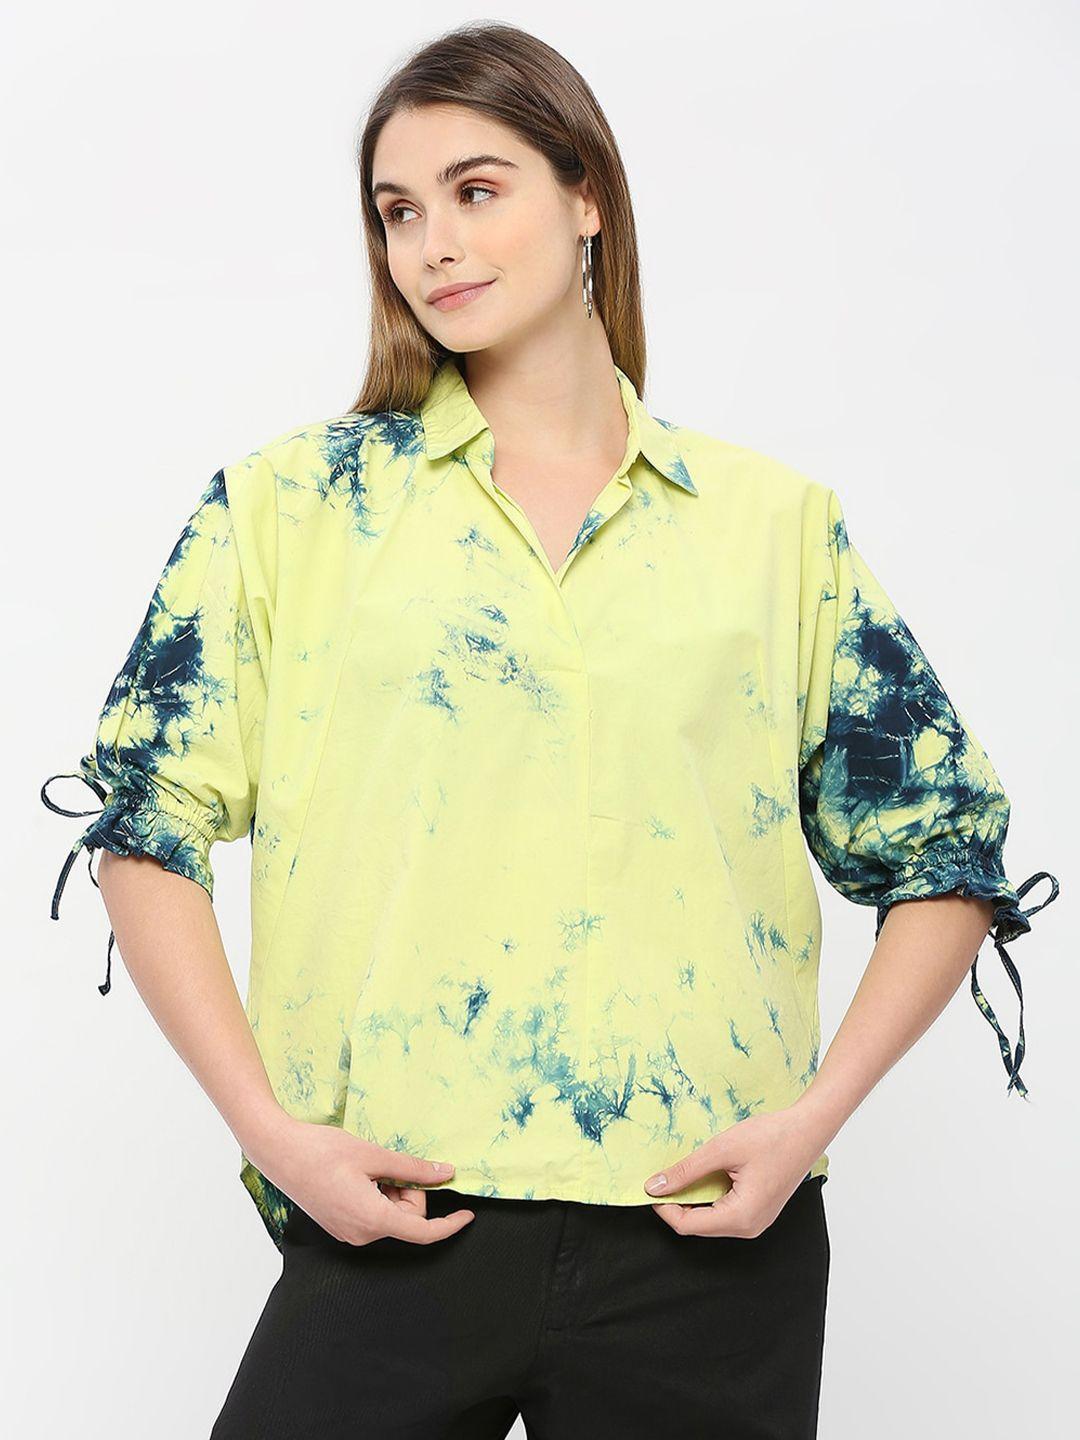 remanika comfort dyed cotton casual shirt